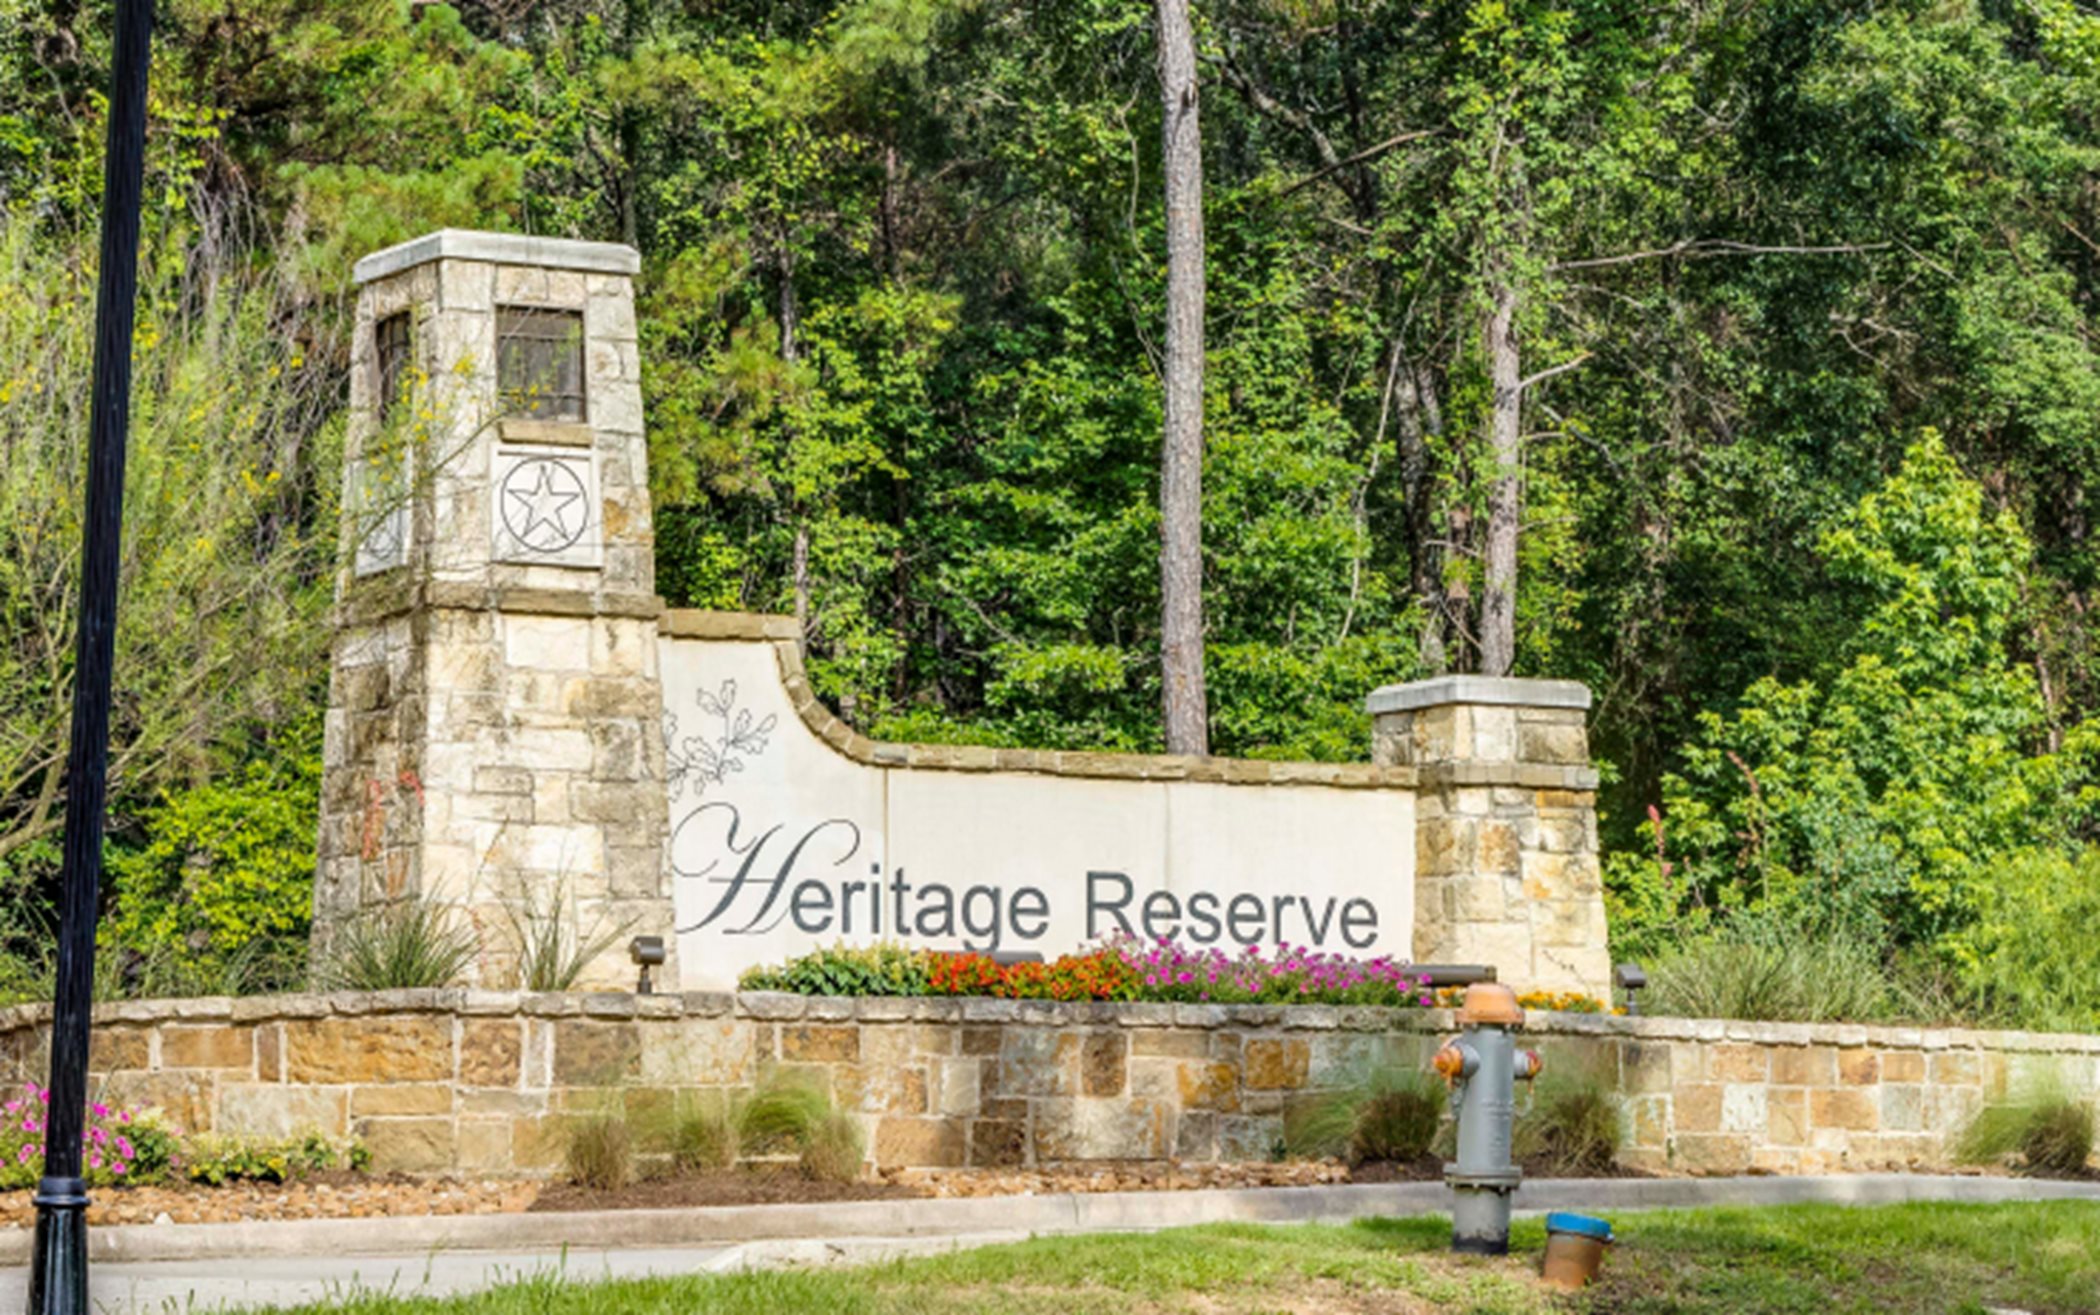 Heritage Reserve Monument